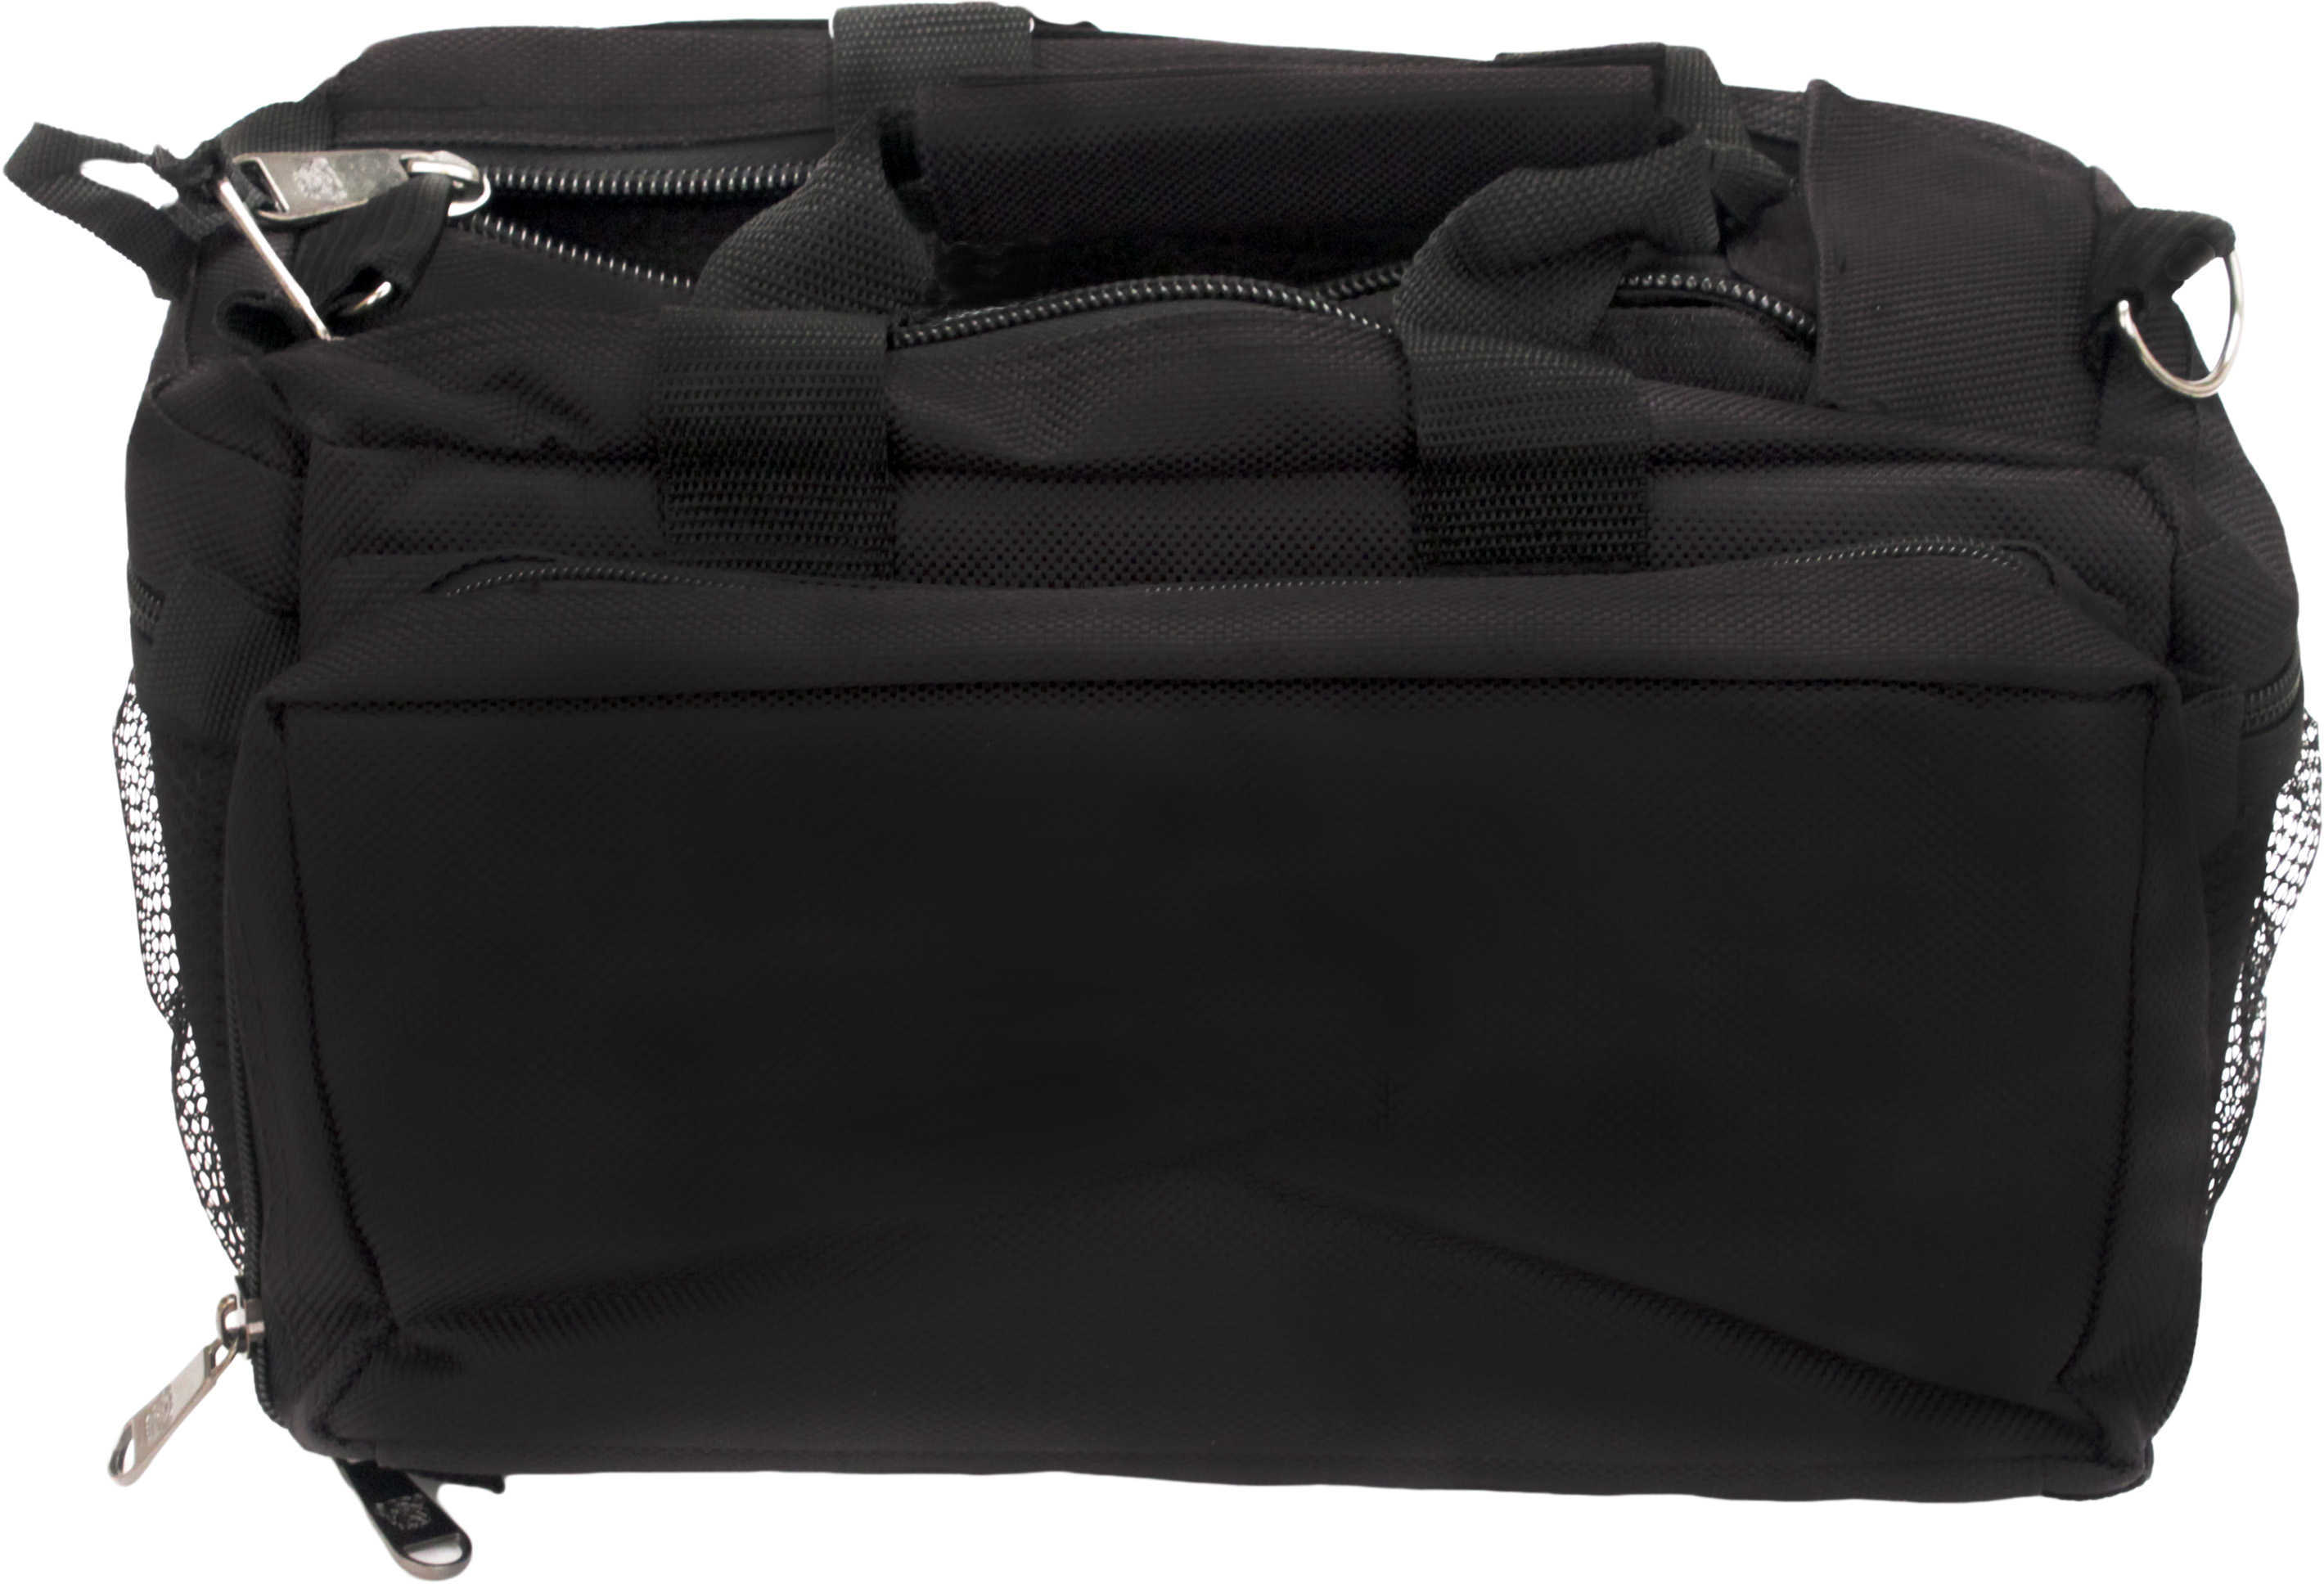 Bulldog Cases Deluxe Black Range Bag Withstrap (Ff)